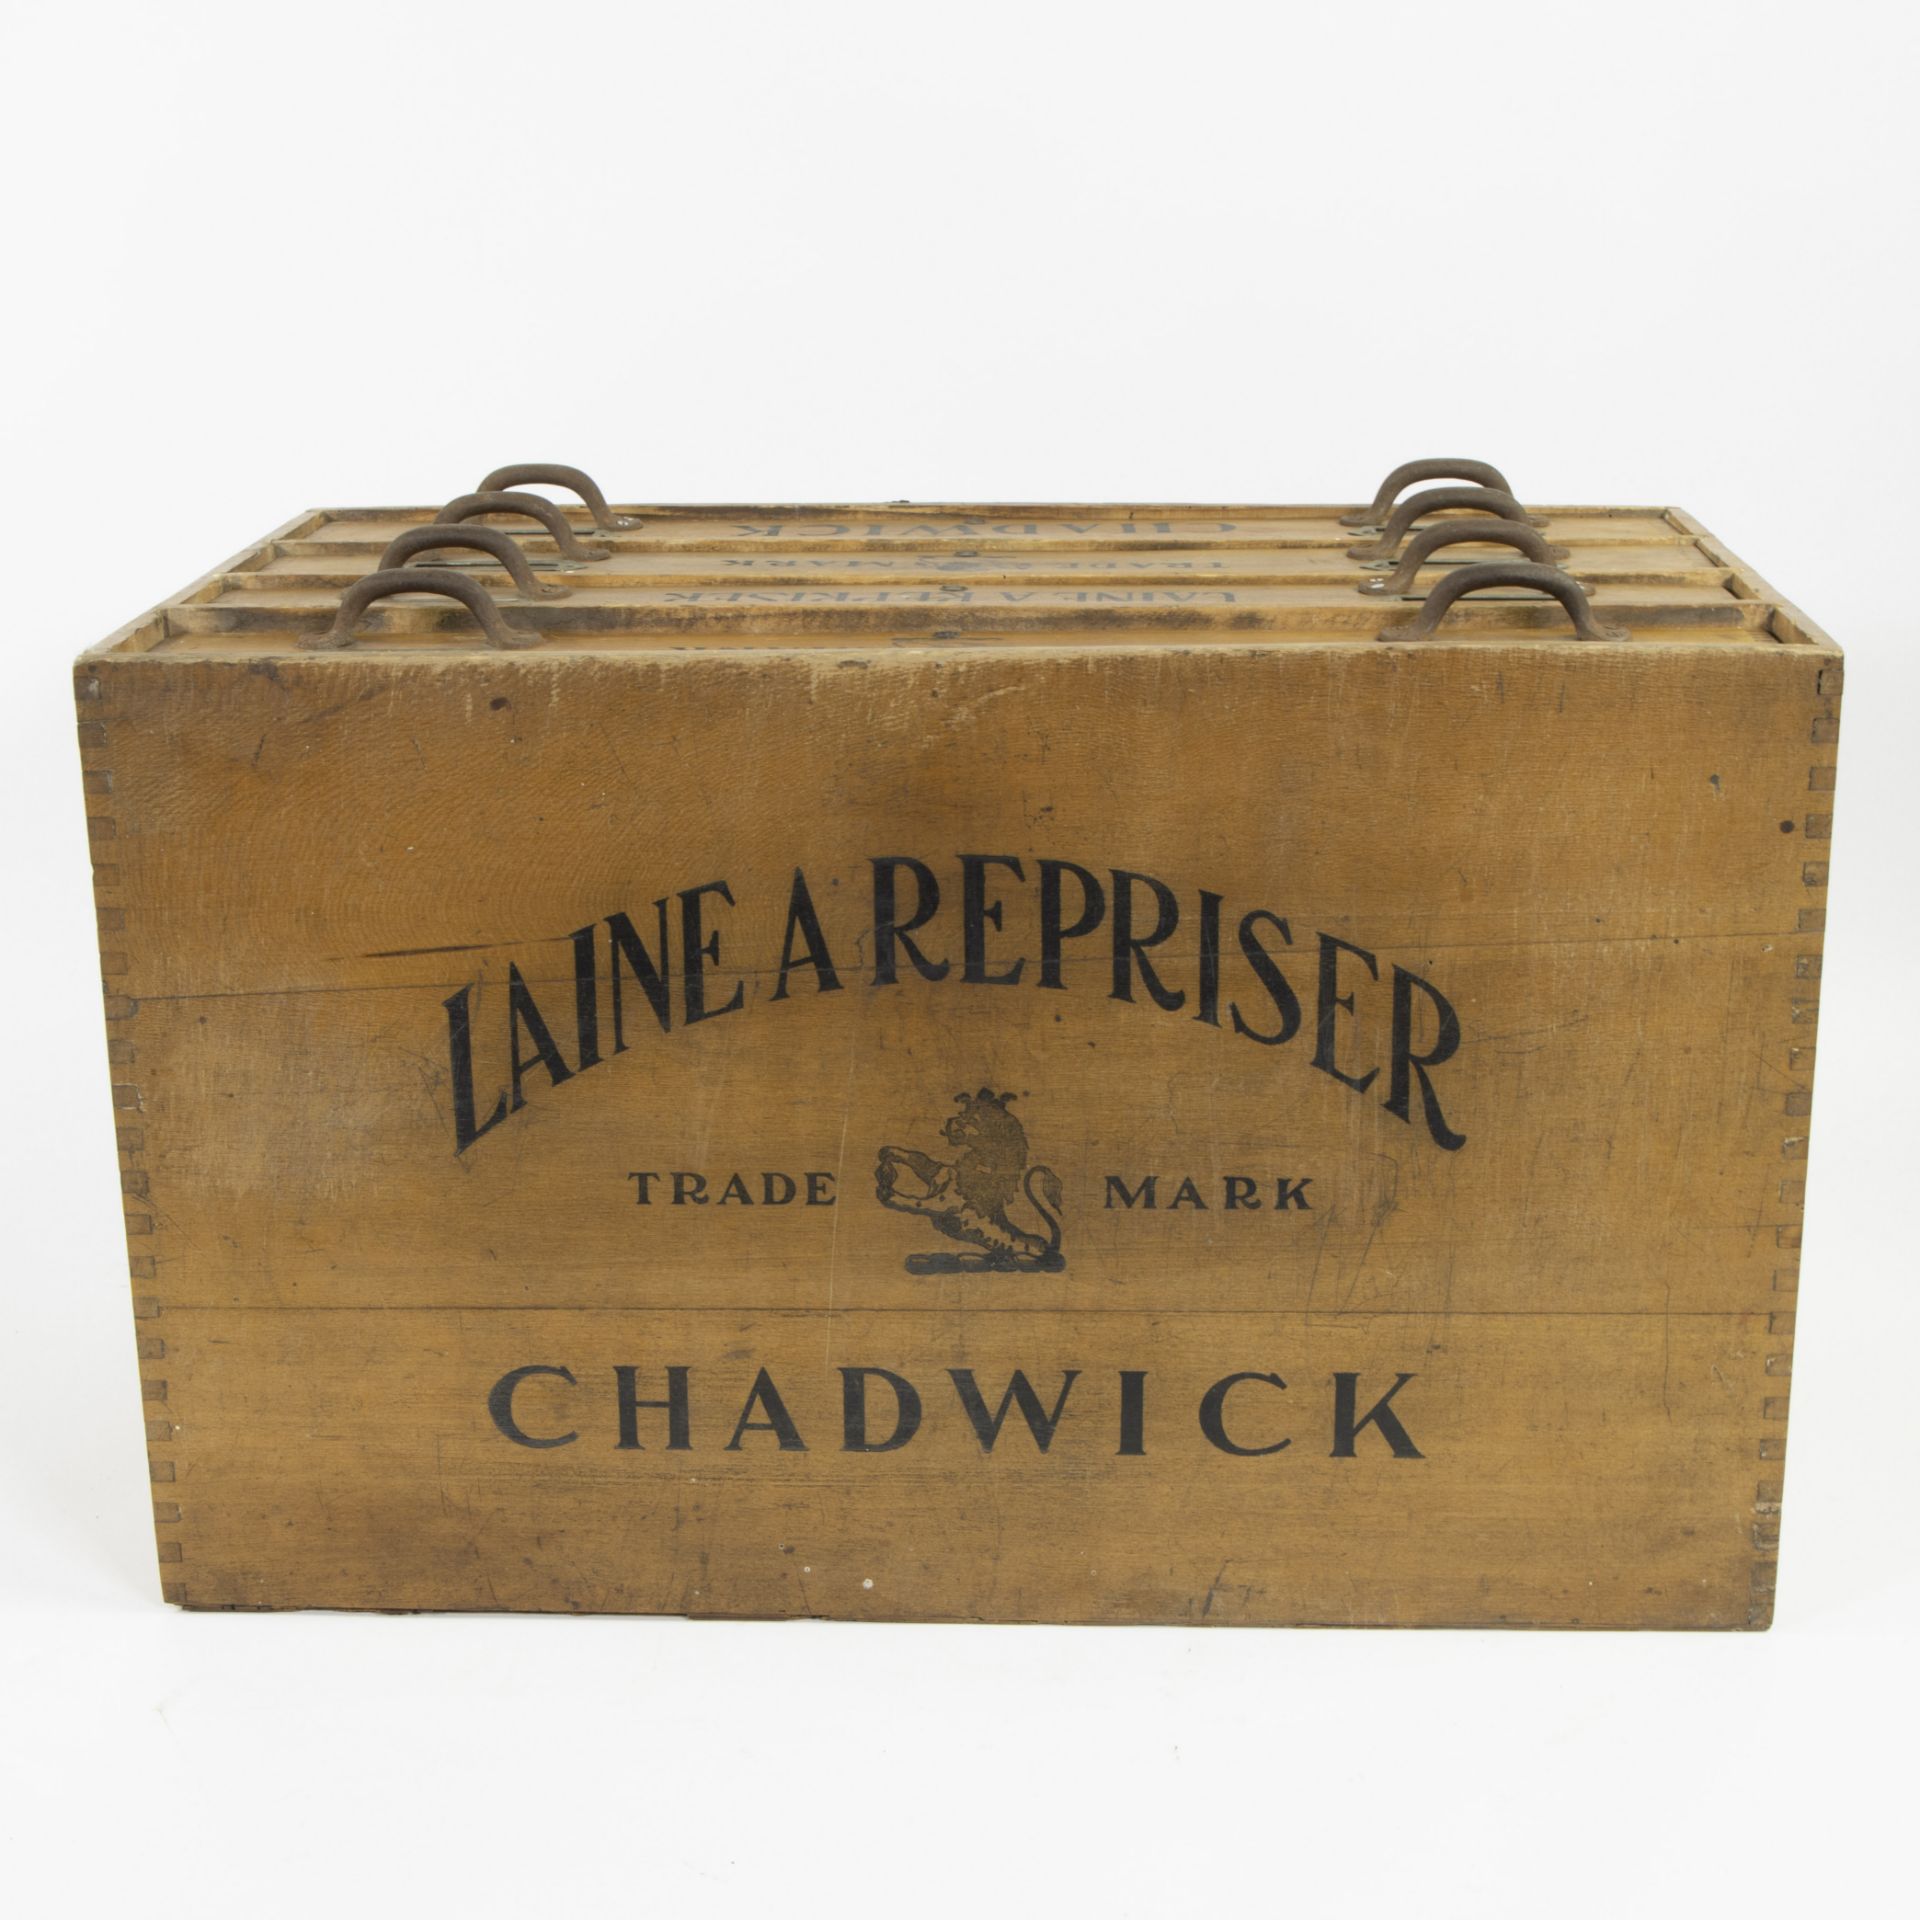 Beautiful sewing box - laine repriser, trade mark Chadwick - Bild 3 aus 3